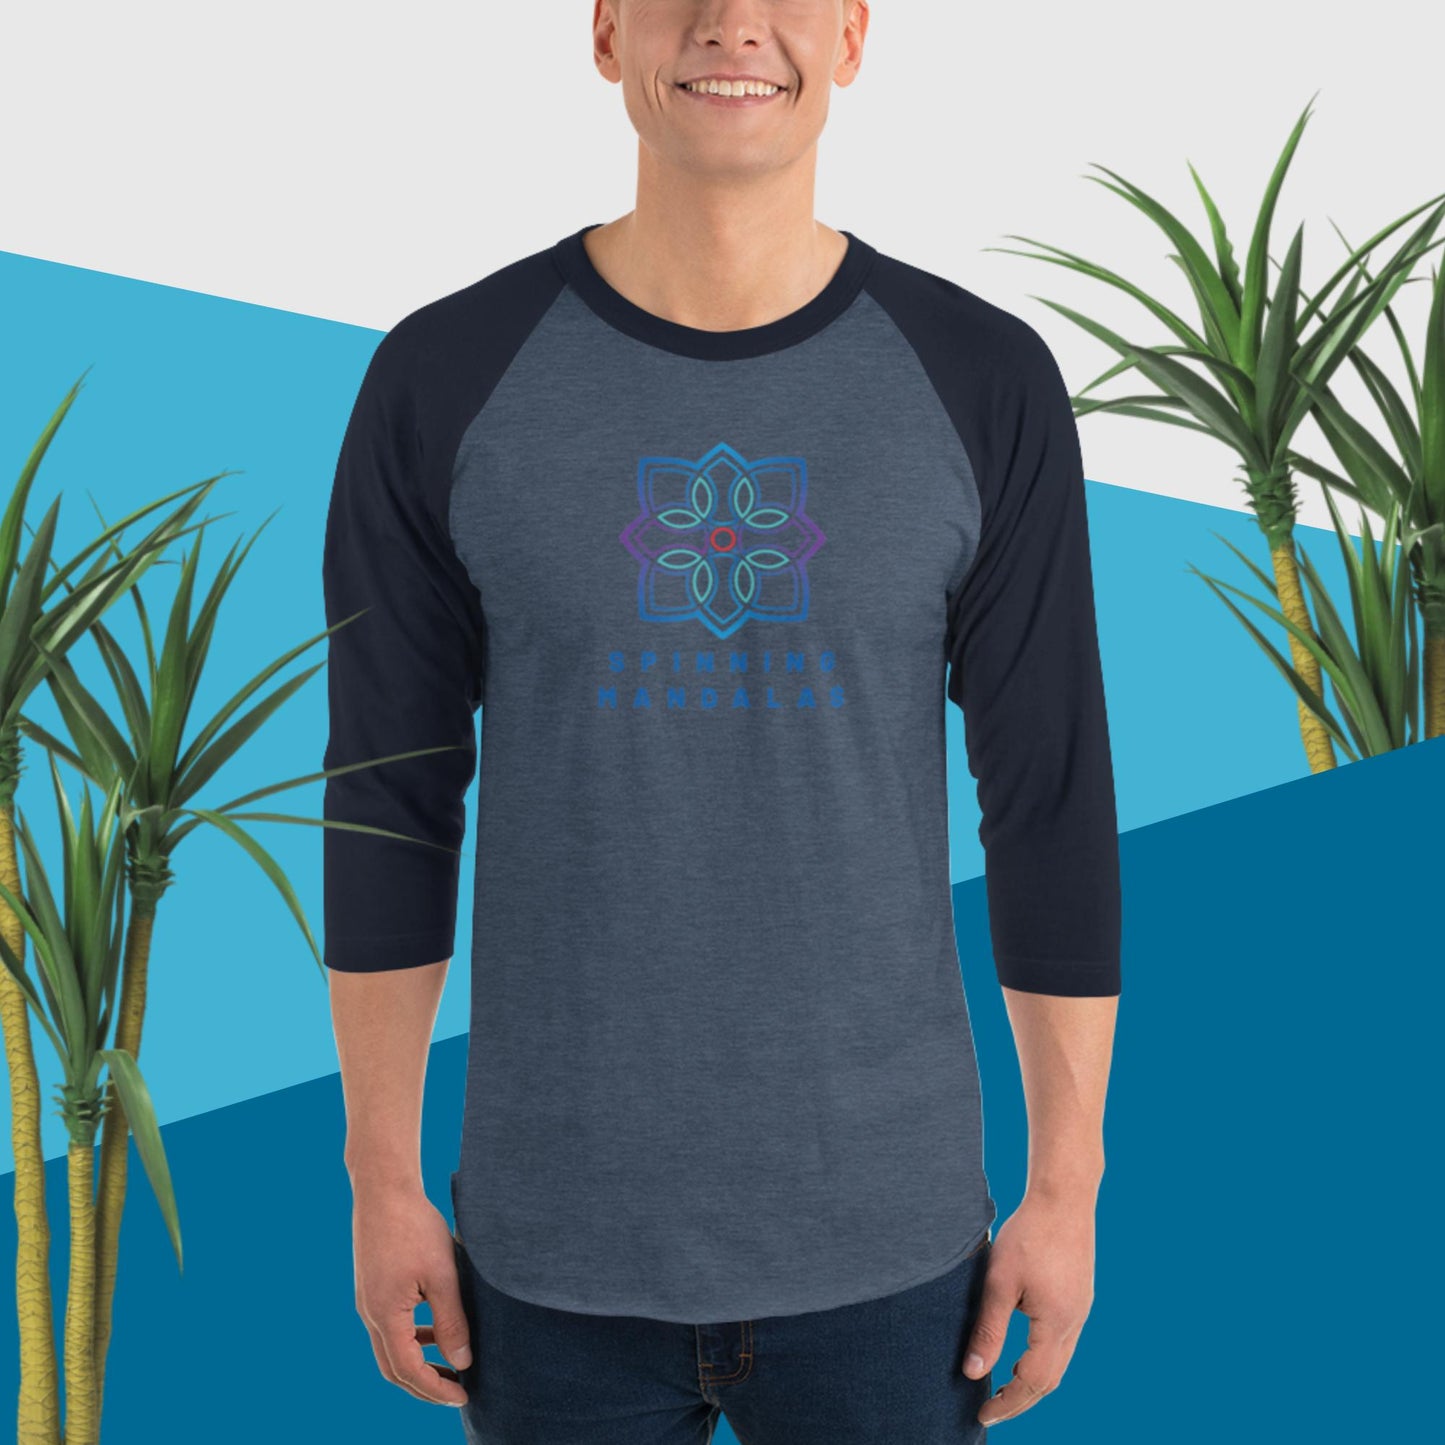 Denim Grey with Navy Blue 3/4 sleeve Baseball T-shirt. Multiple color combinations available. Brand. Clothing. Cotton. Cotton blend. Spinning Mandalas spinningmandalas.com